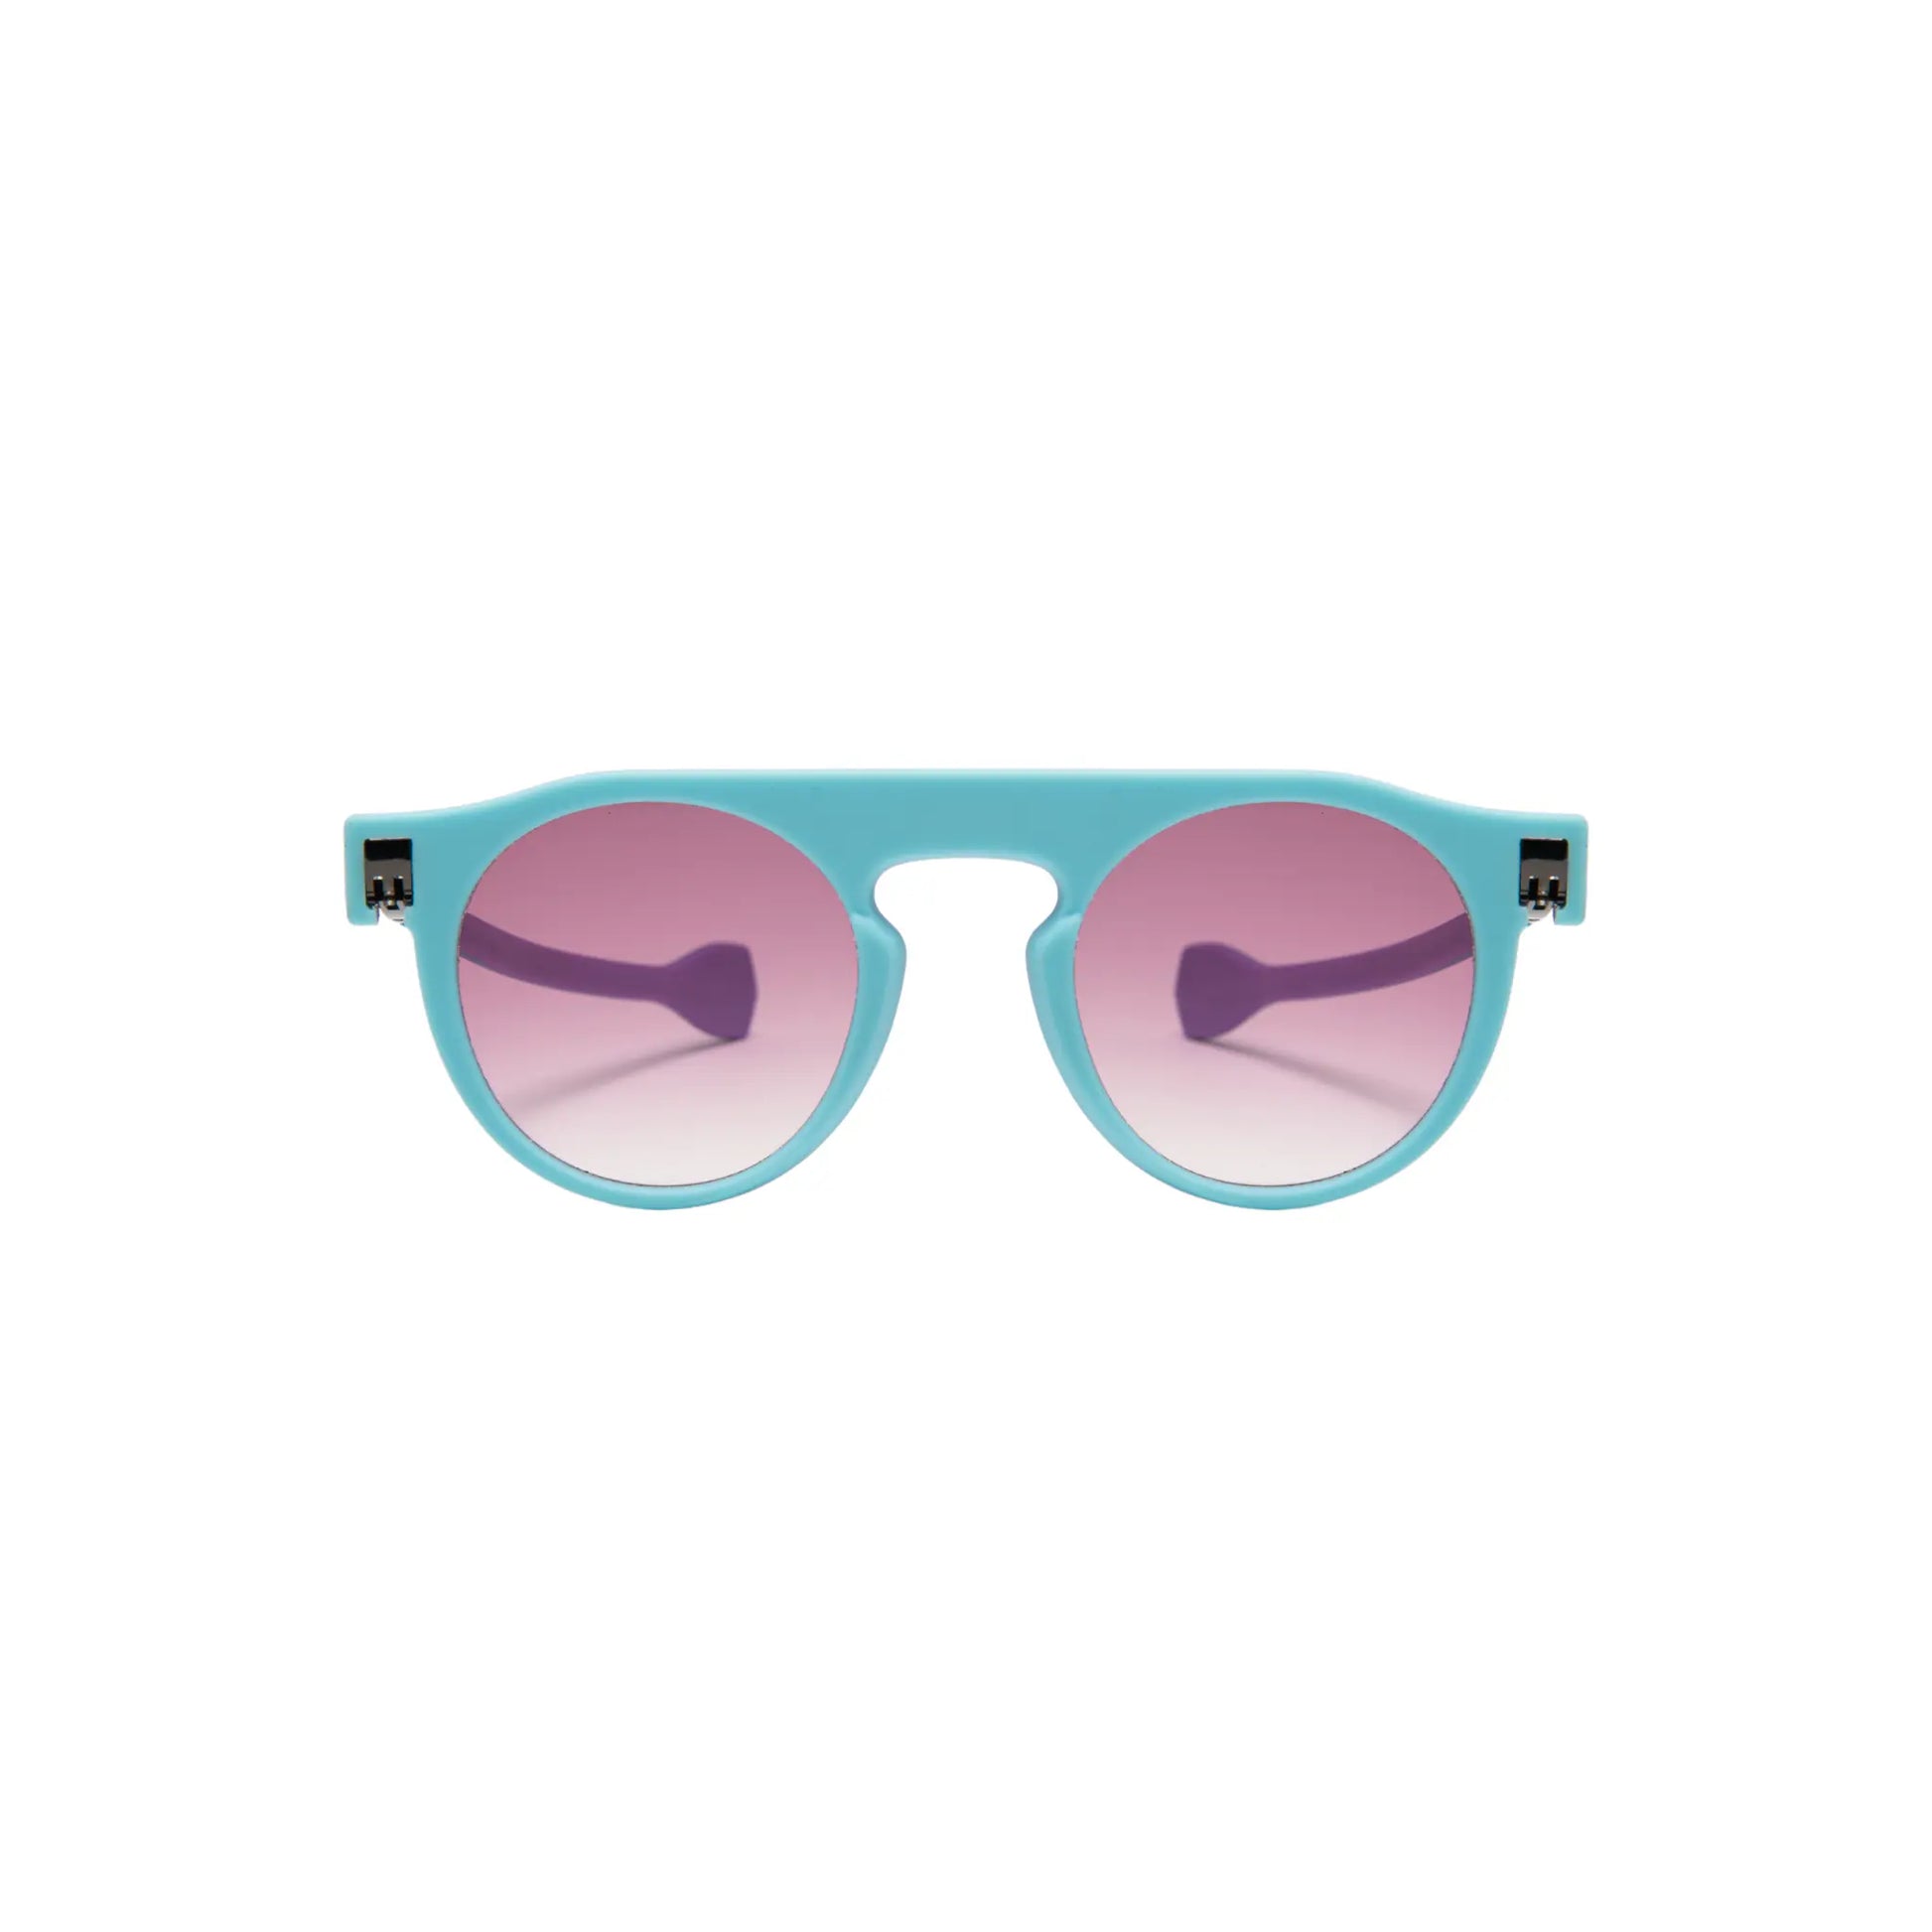 Reverso sunglasses violet & tiffany blue reversible & ultra light front view 1